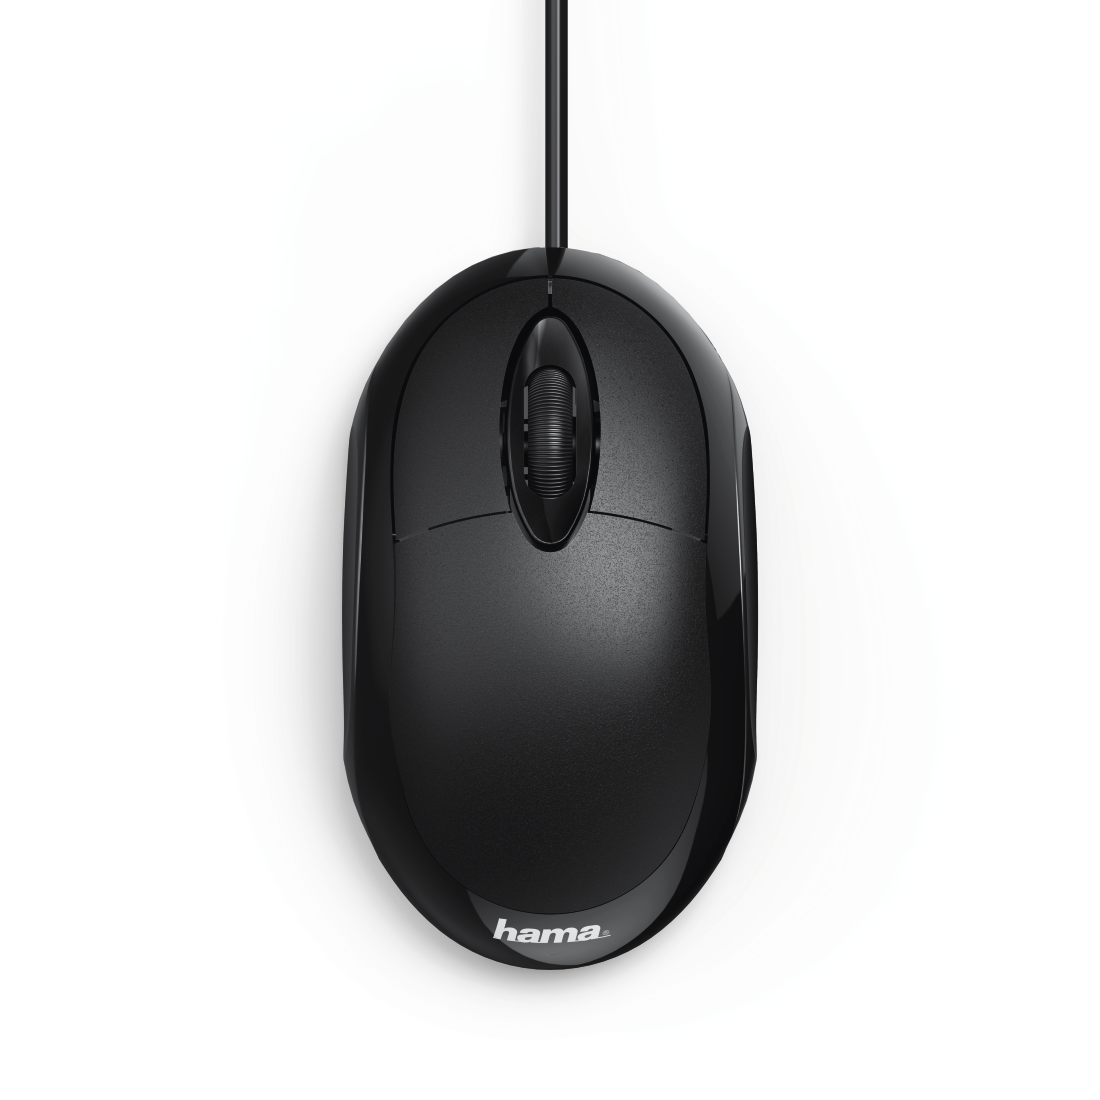 Hama 00182600 MC-100 Optical 3-Button Mouse, Cabled, black